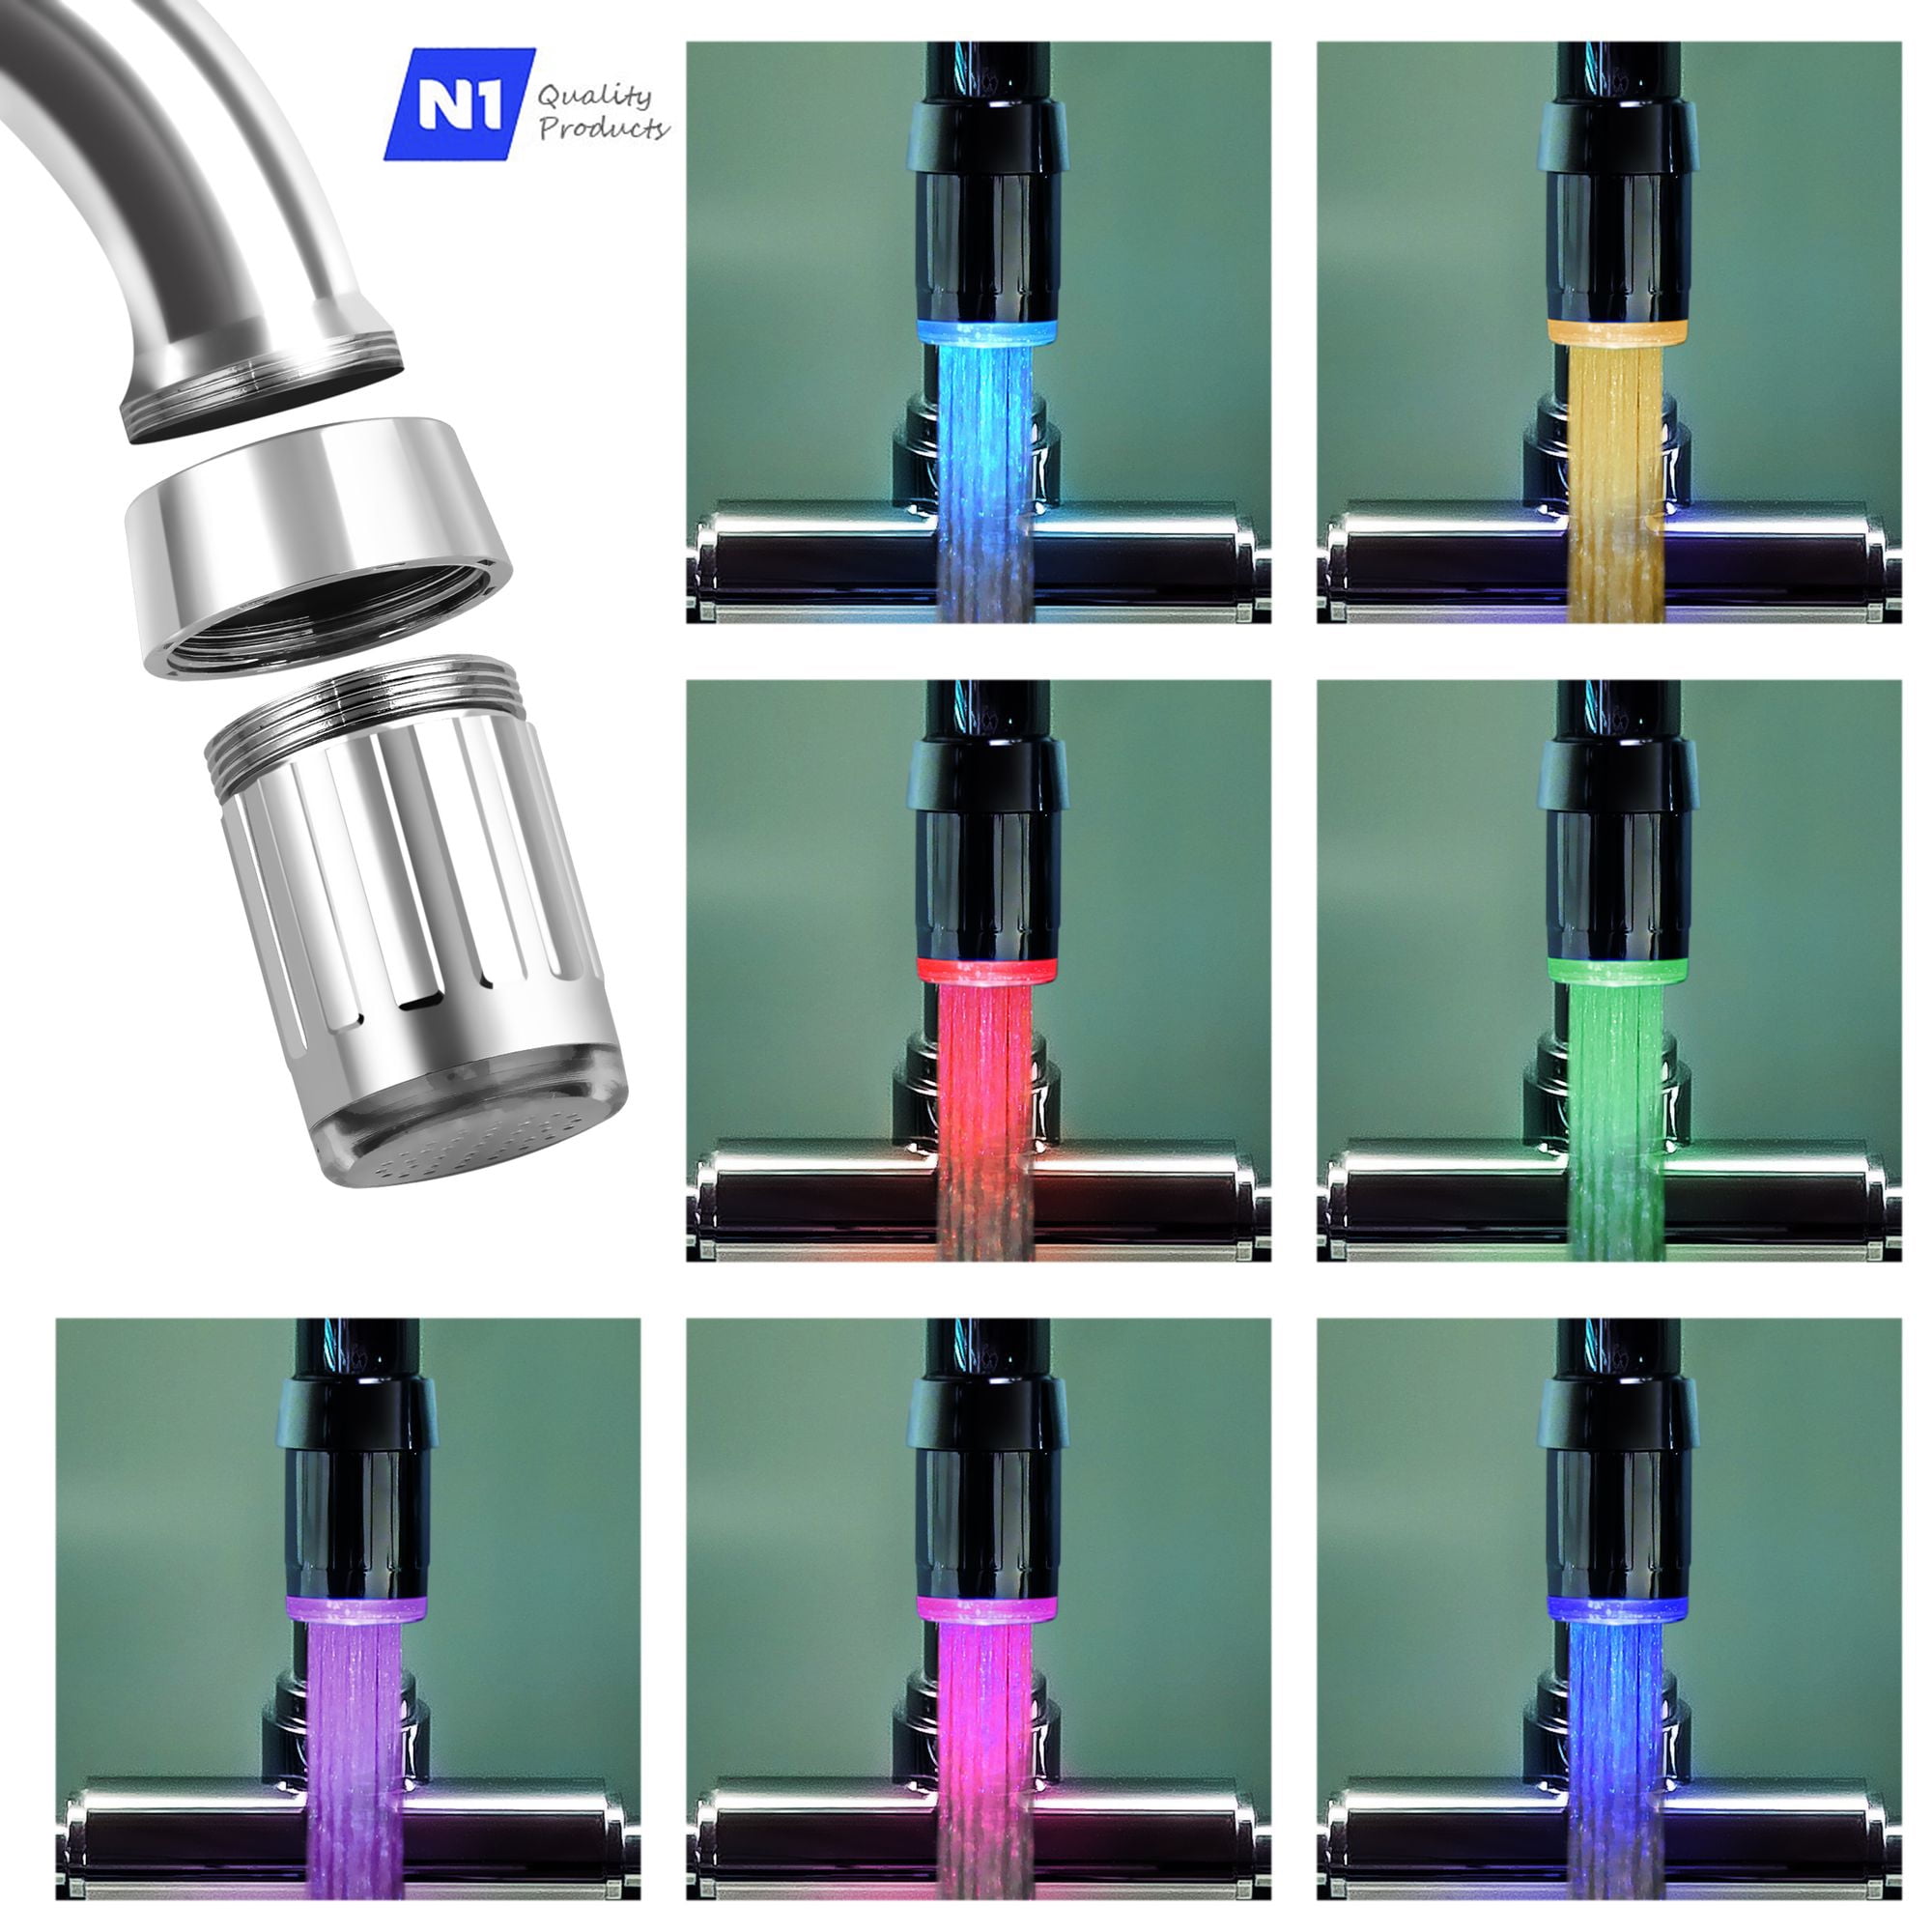 Cloudy Light Sensitive Faucet Control Night Light 7 Colors Pat